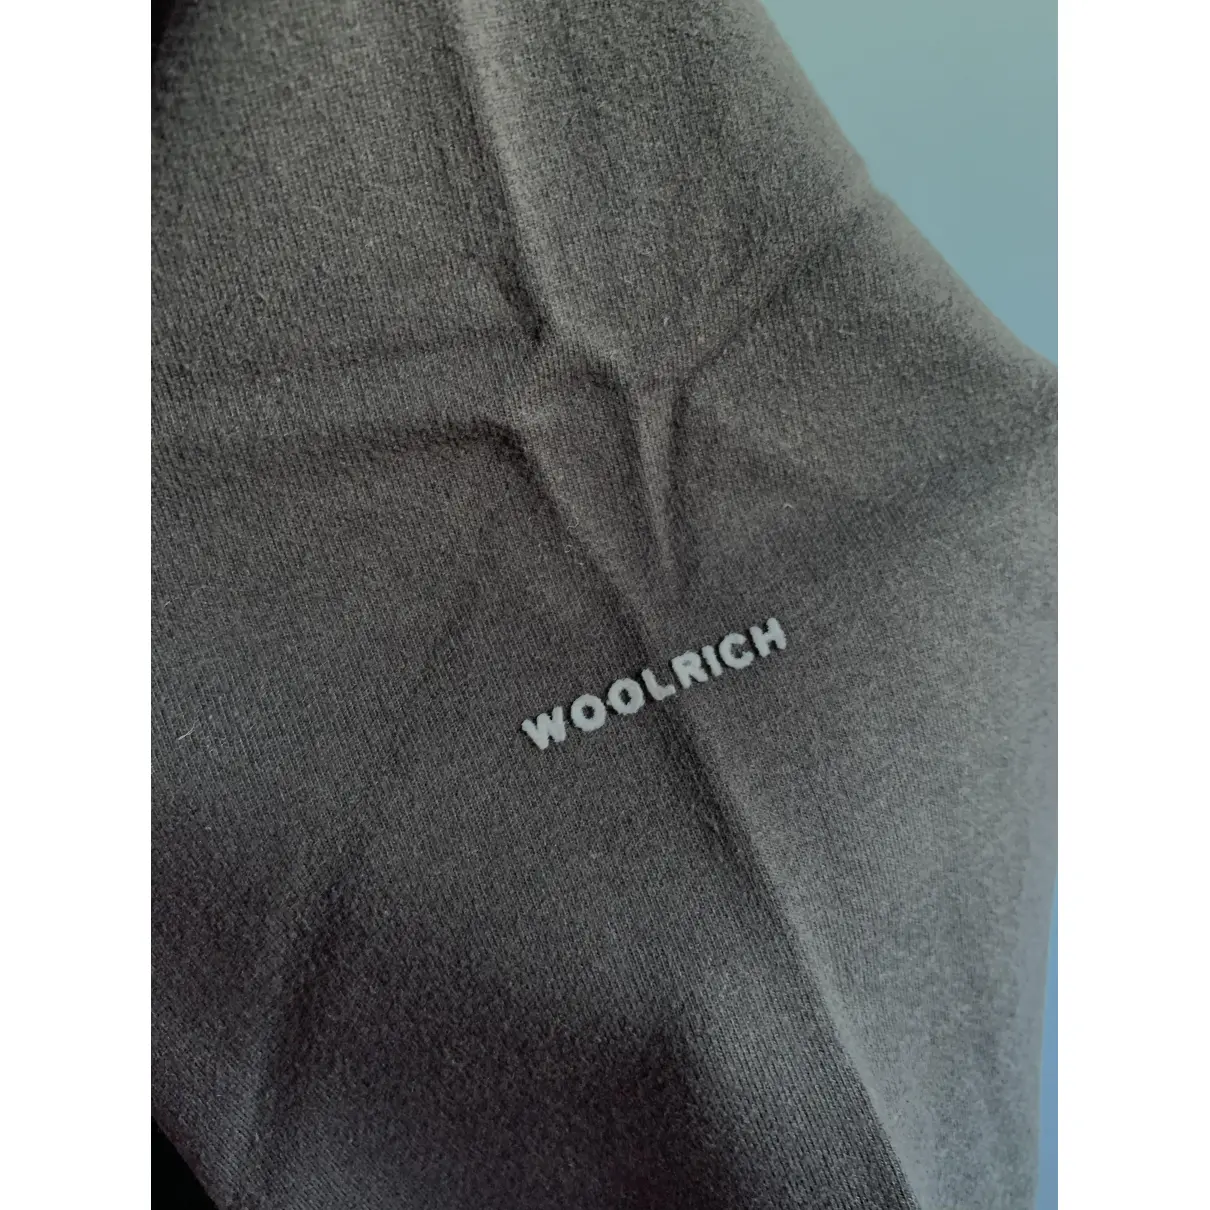 Buy Woolrich Sweatshirt online